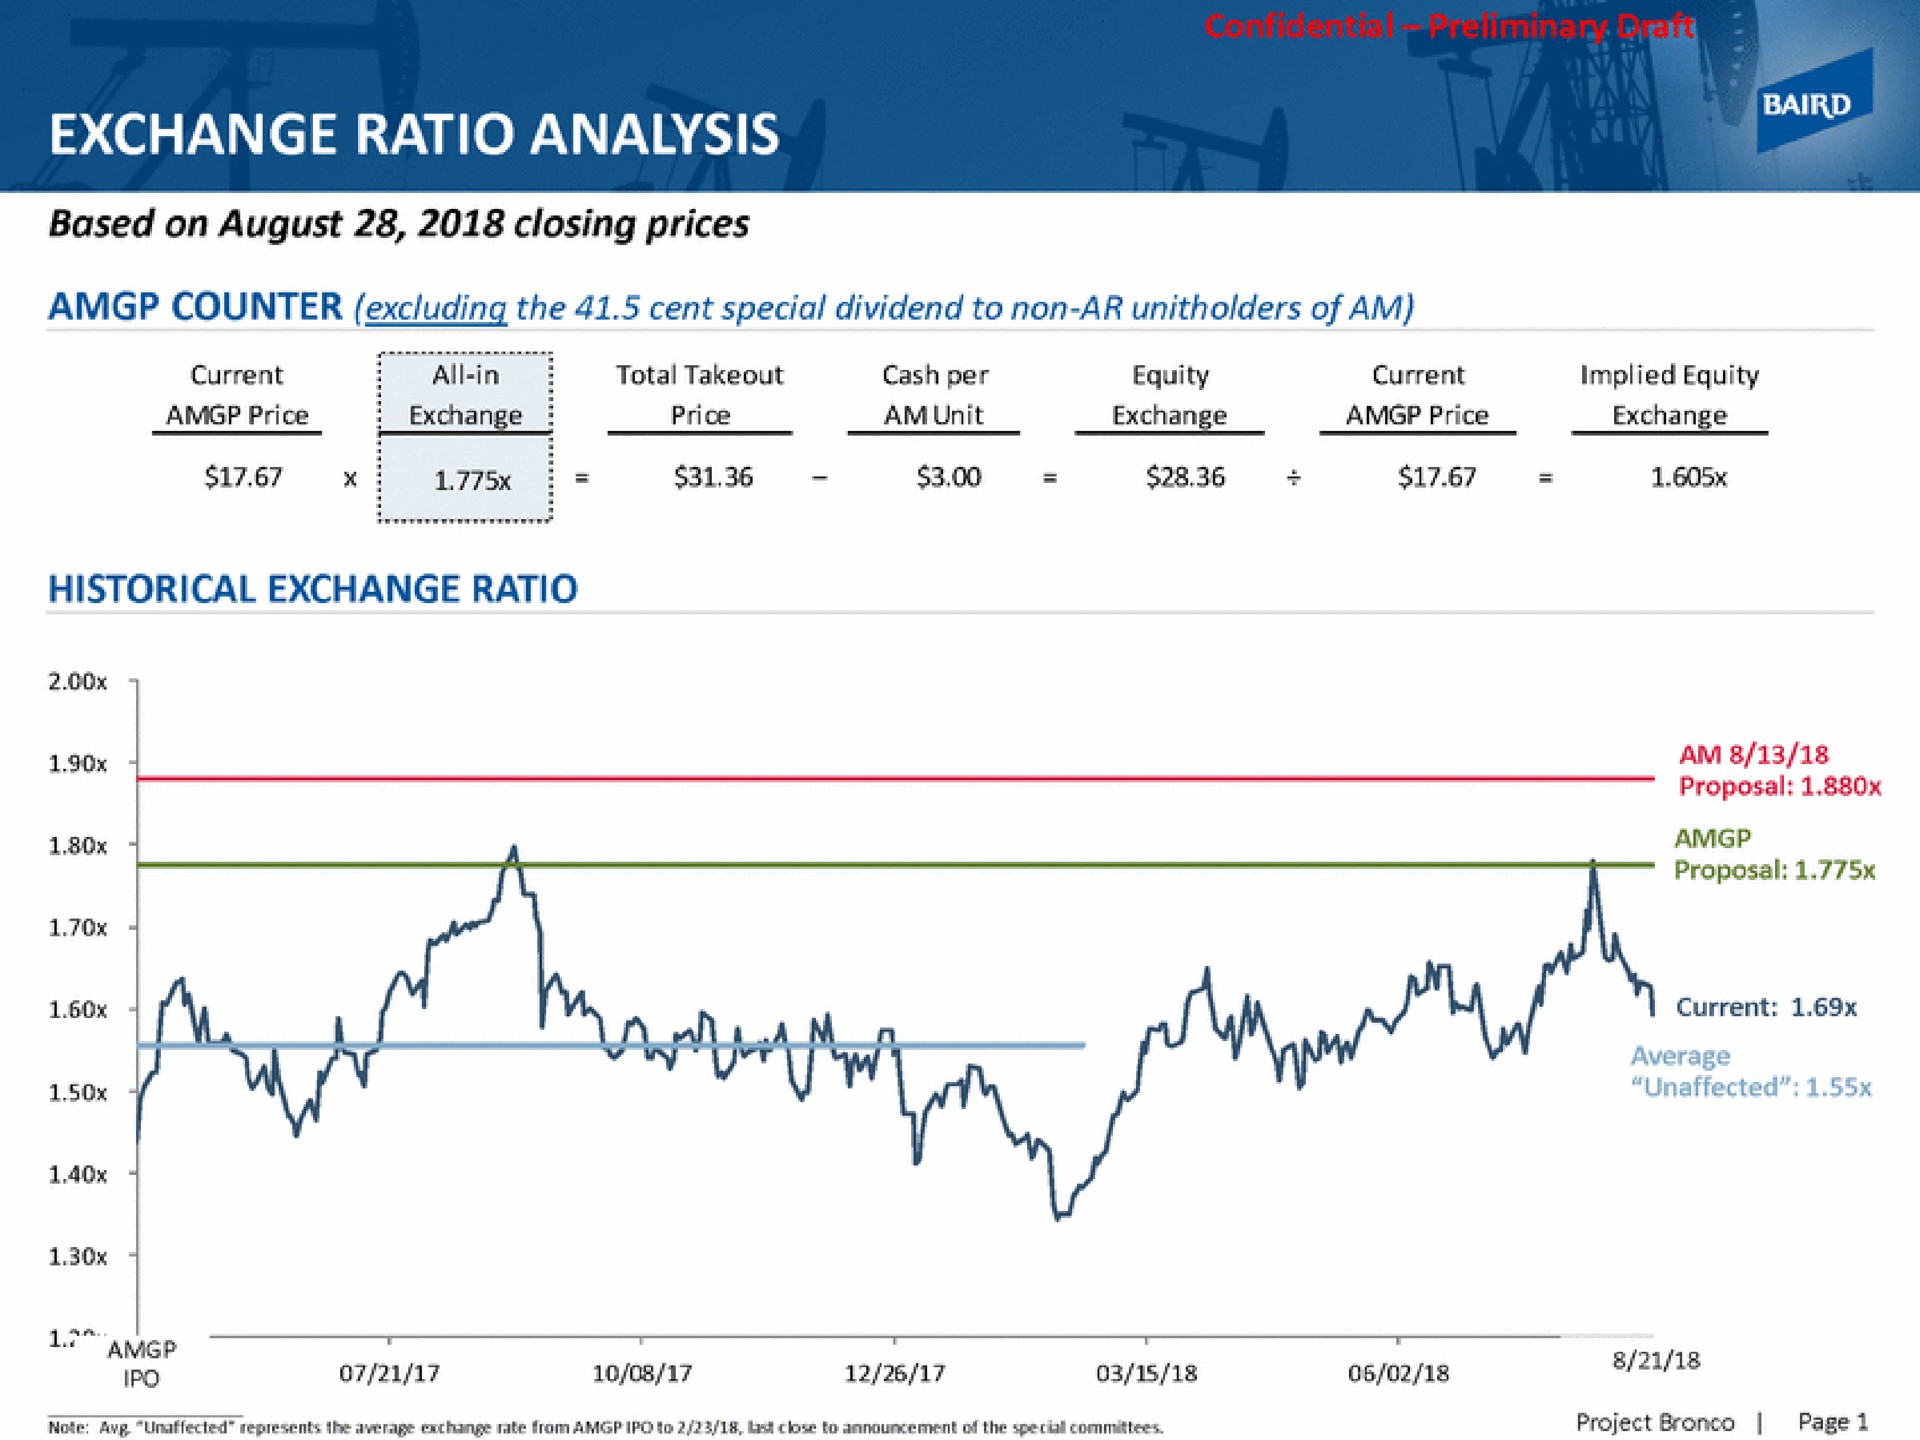 exchange ratio analysis | Baird